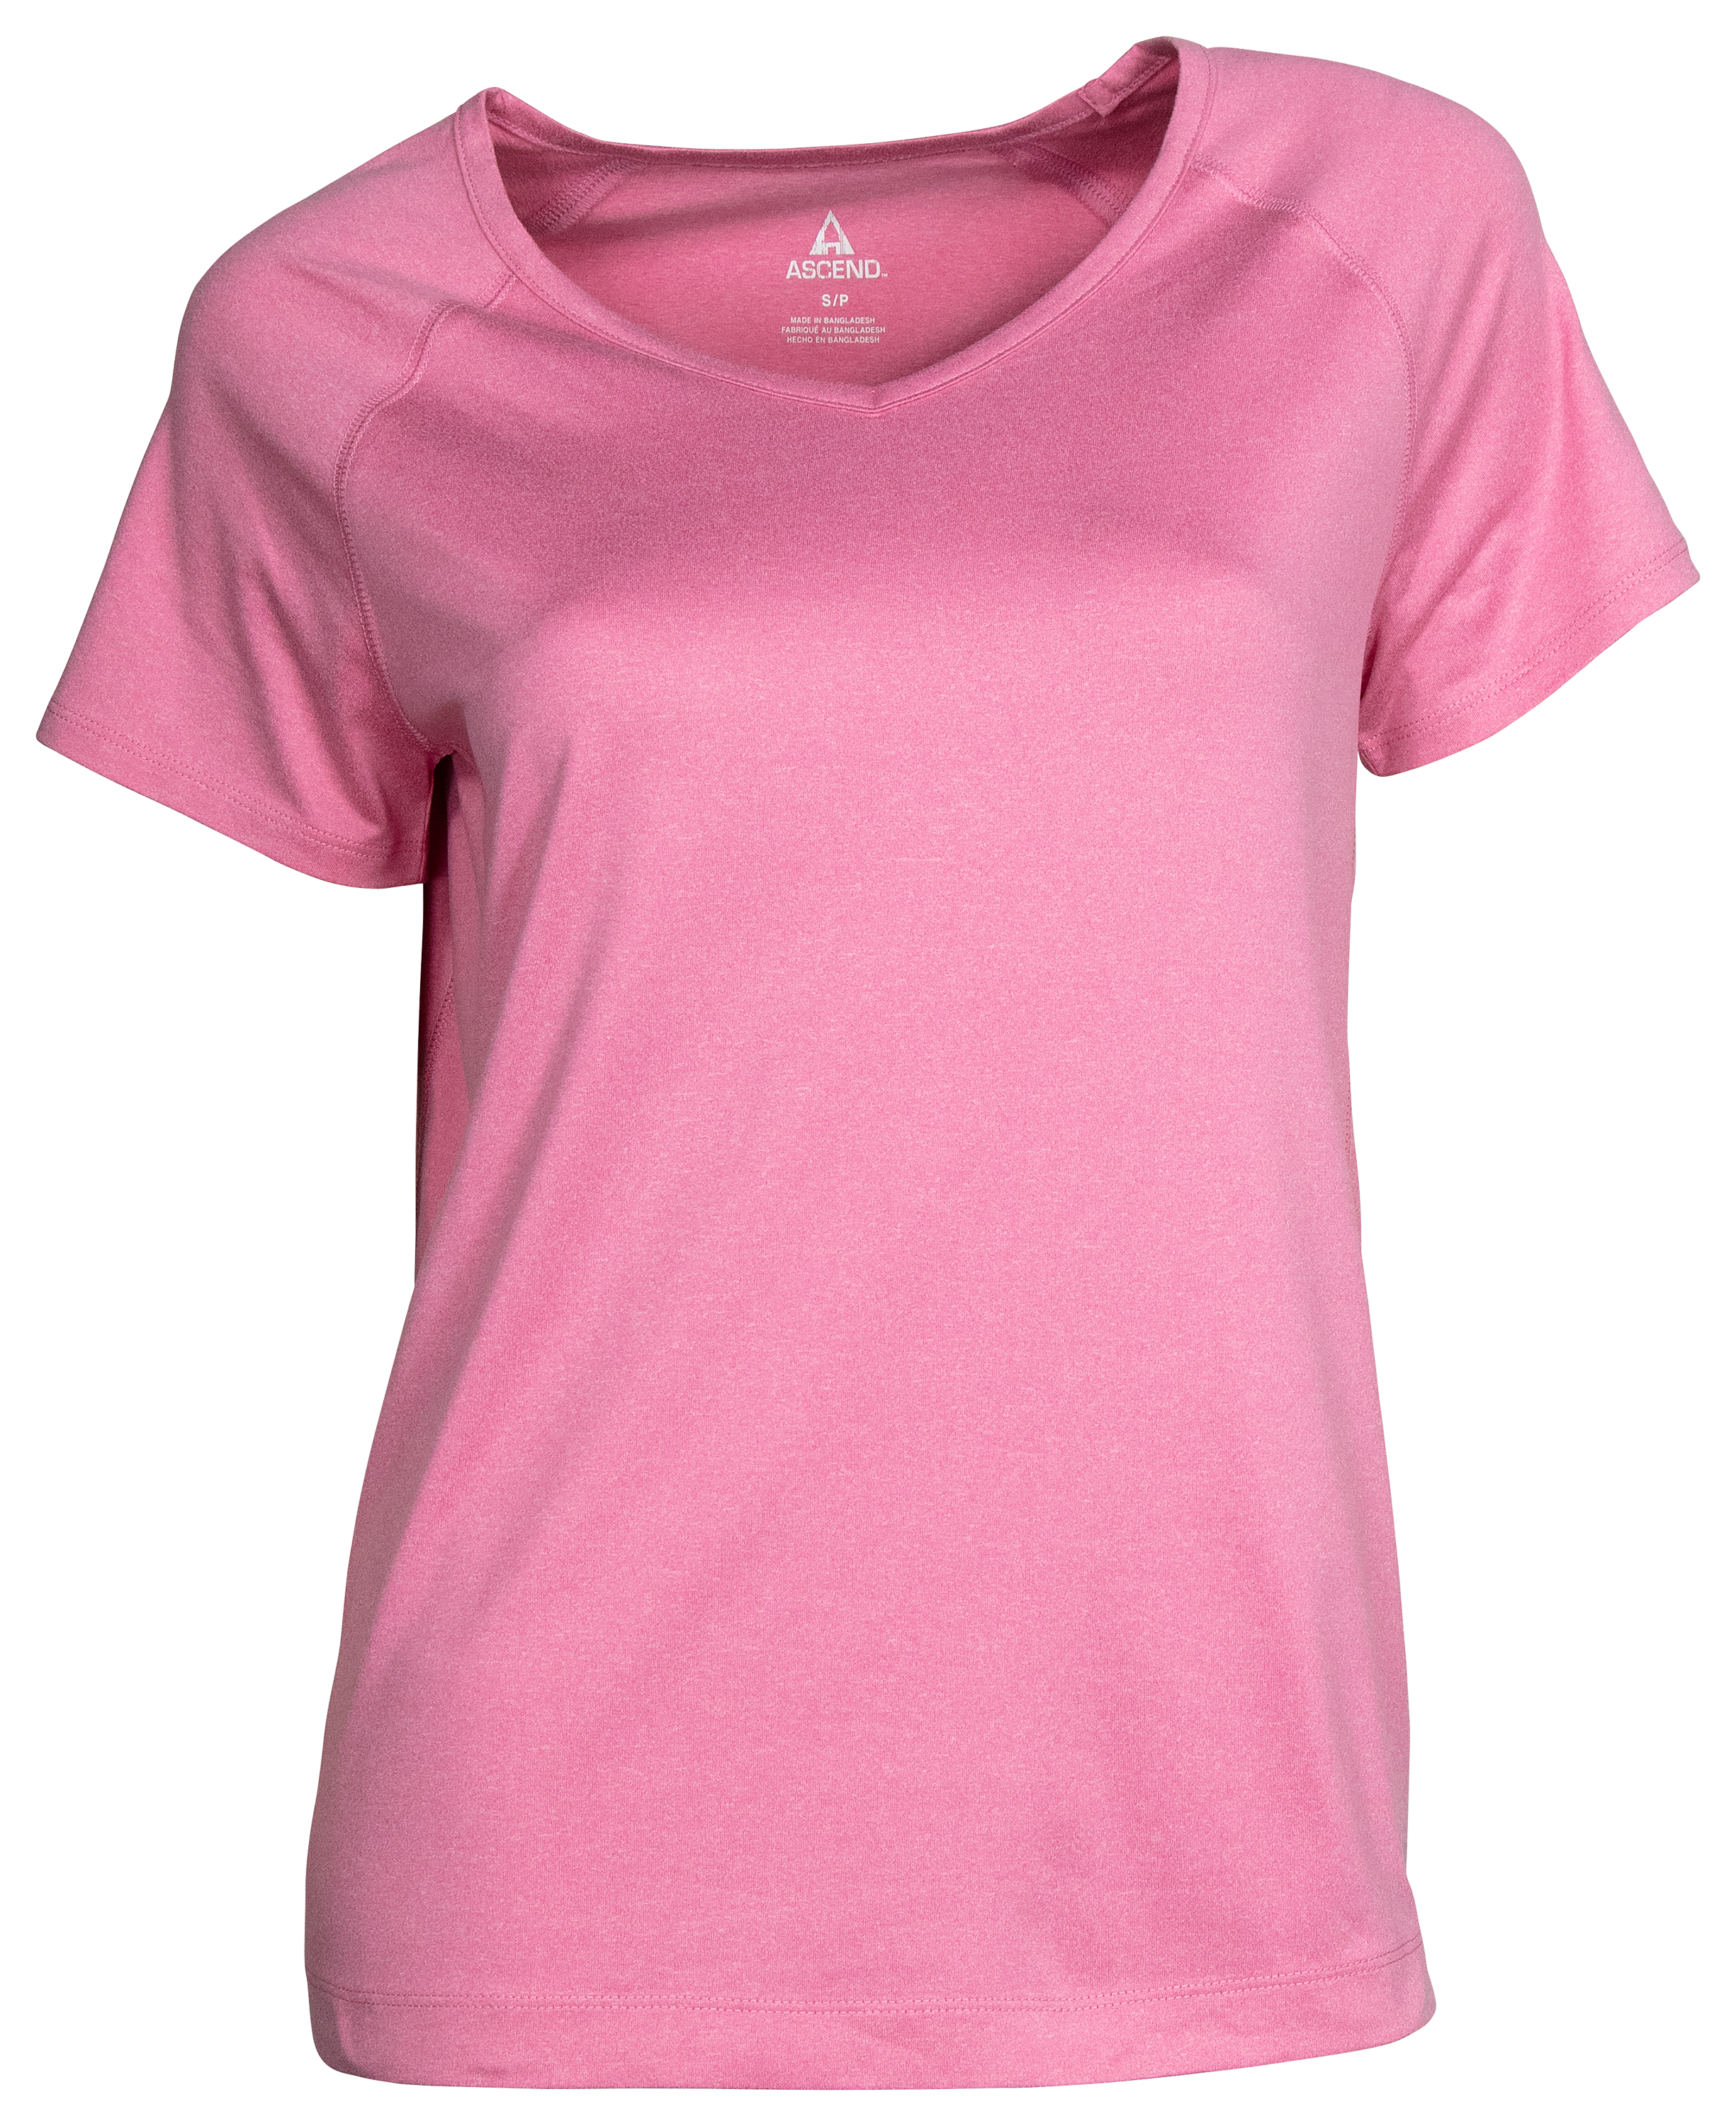 Ascend Raglan Performance Short-Sleeve T-Shirt for Ladies - Ibis Rose - XL product image